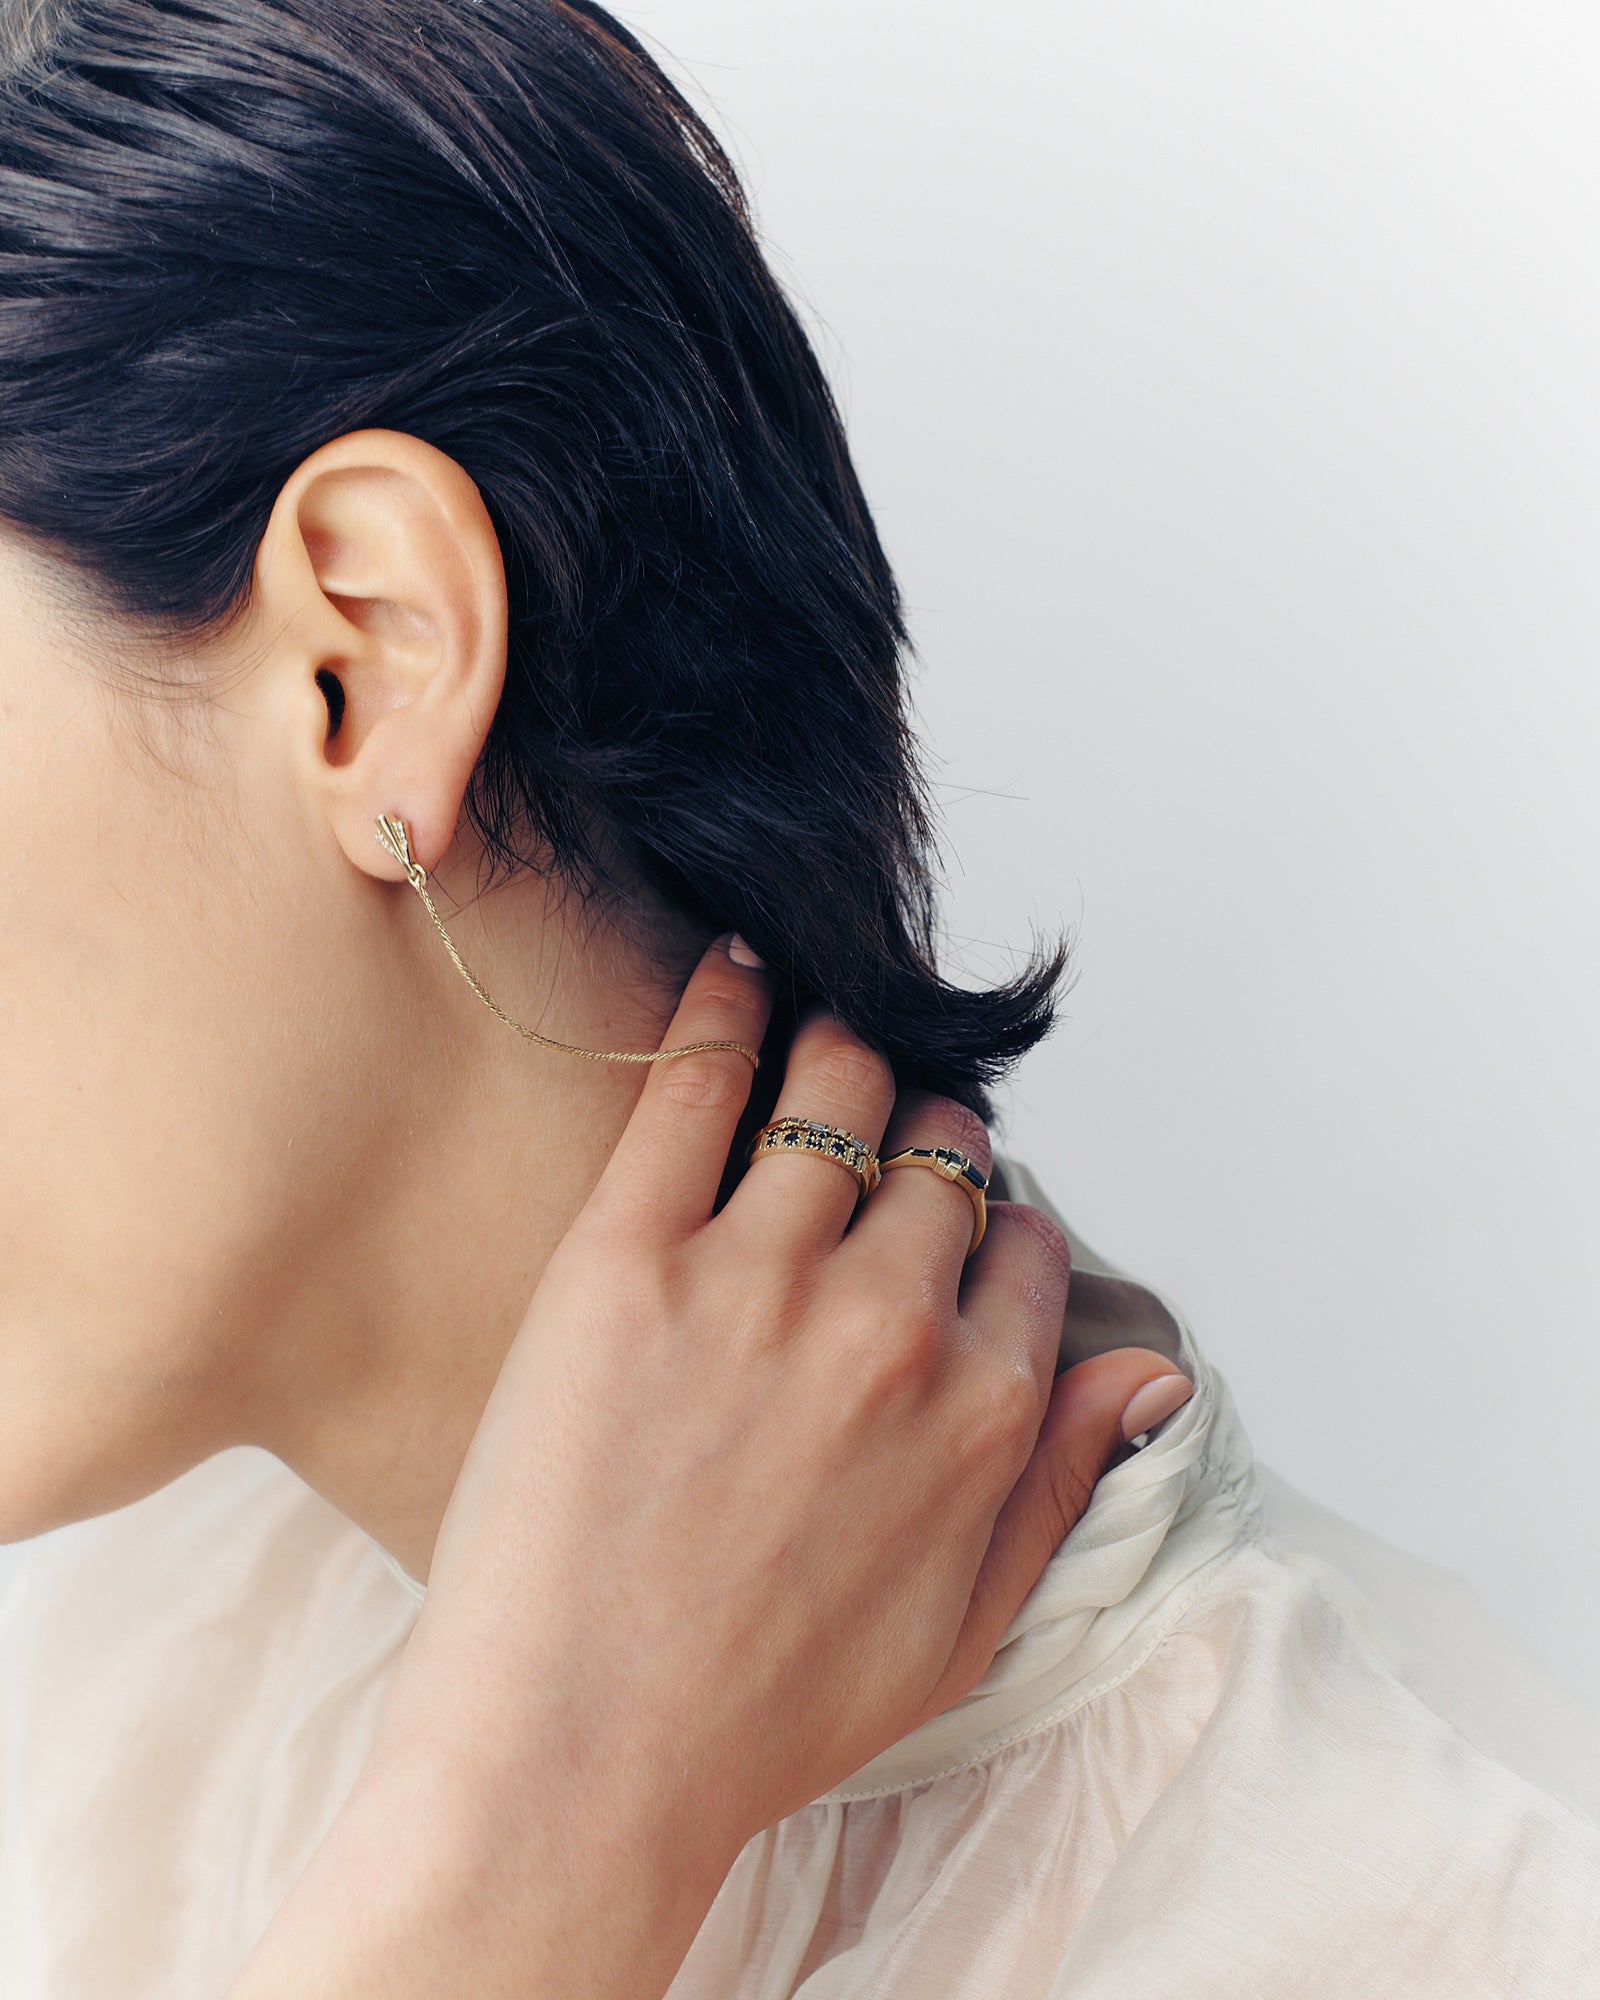 Adele Earrings